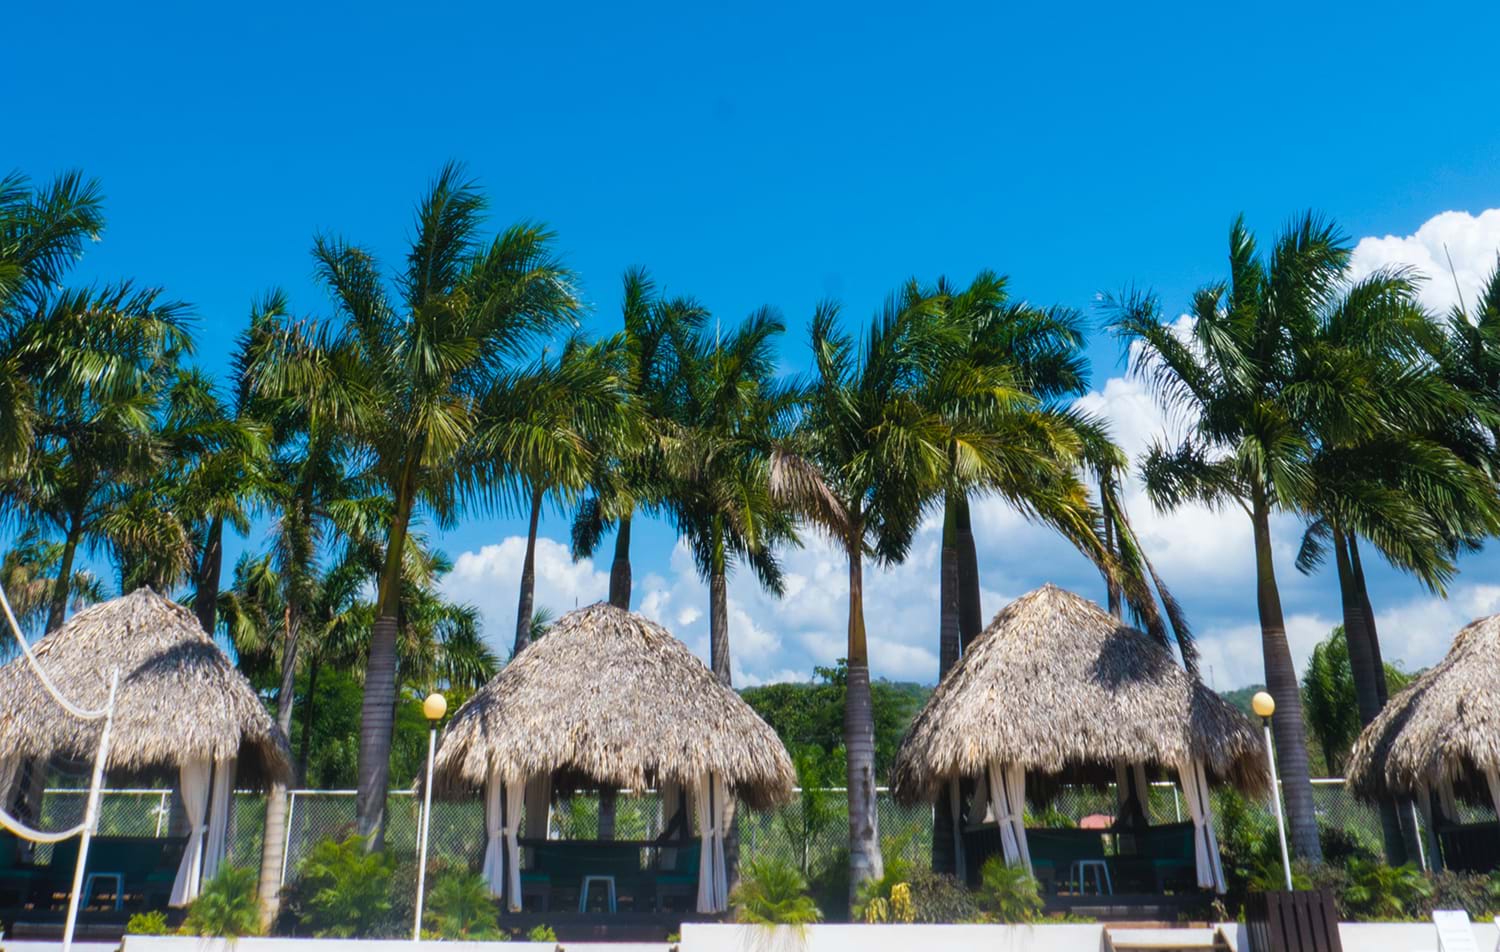 Row of cabanas at beach resort